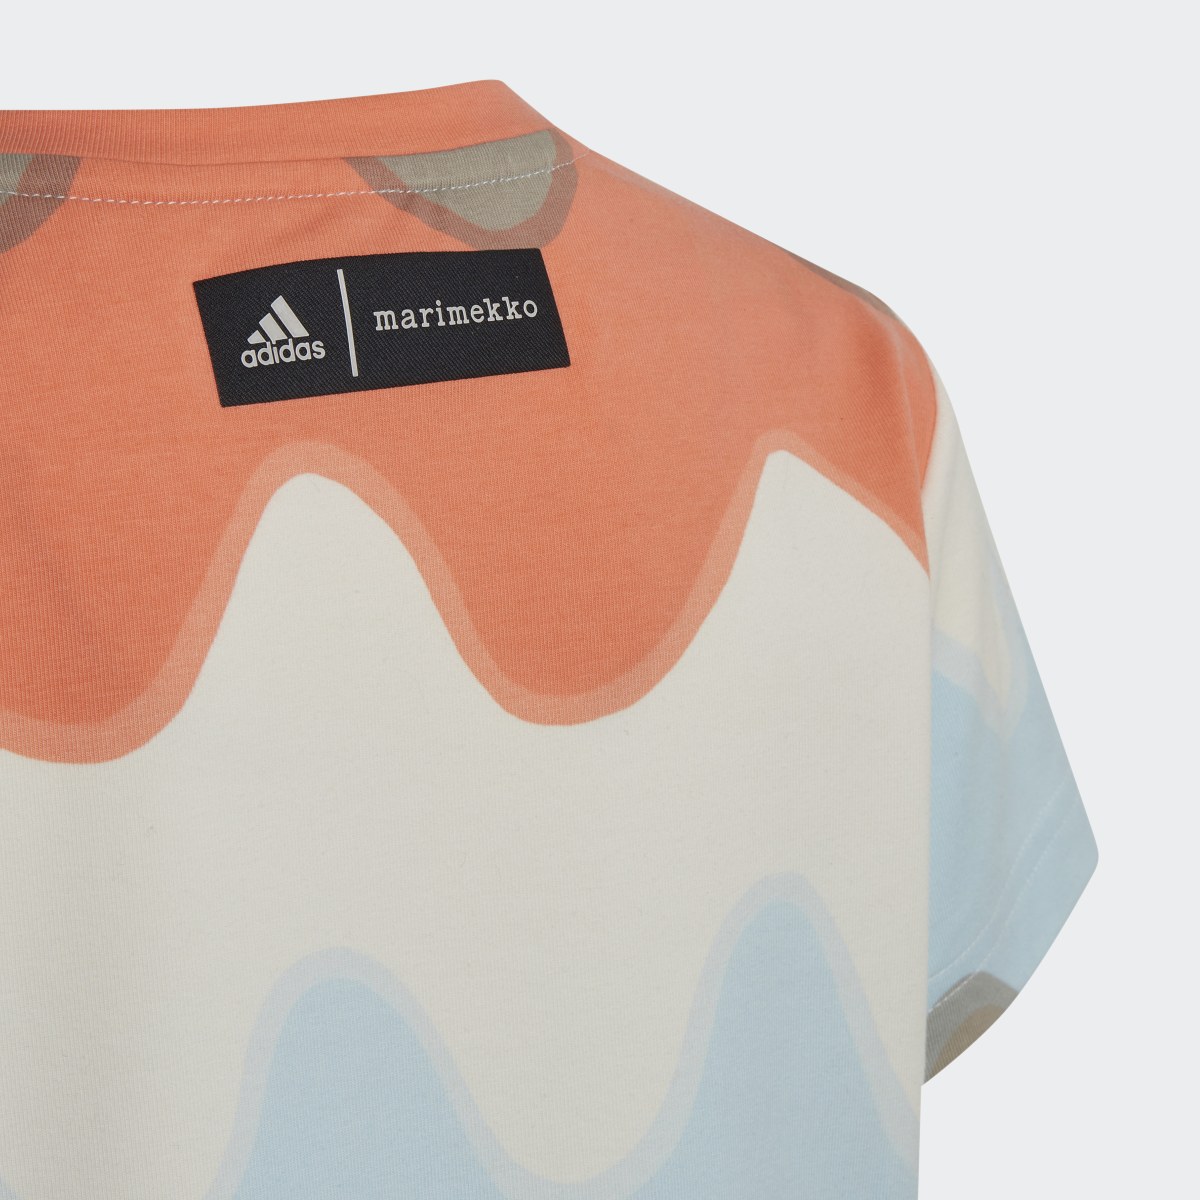 Adidas x Marimekko Allover Print Cotton Set. 7